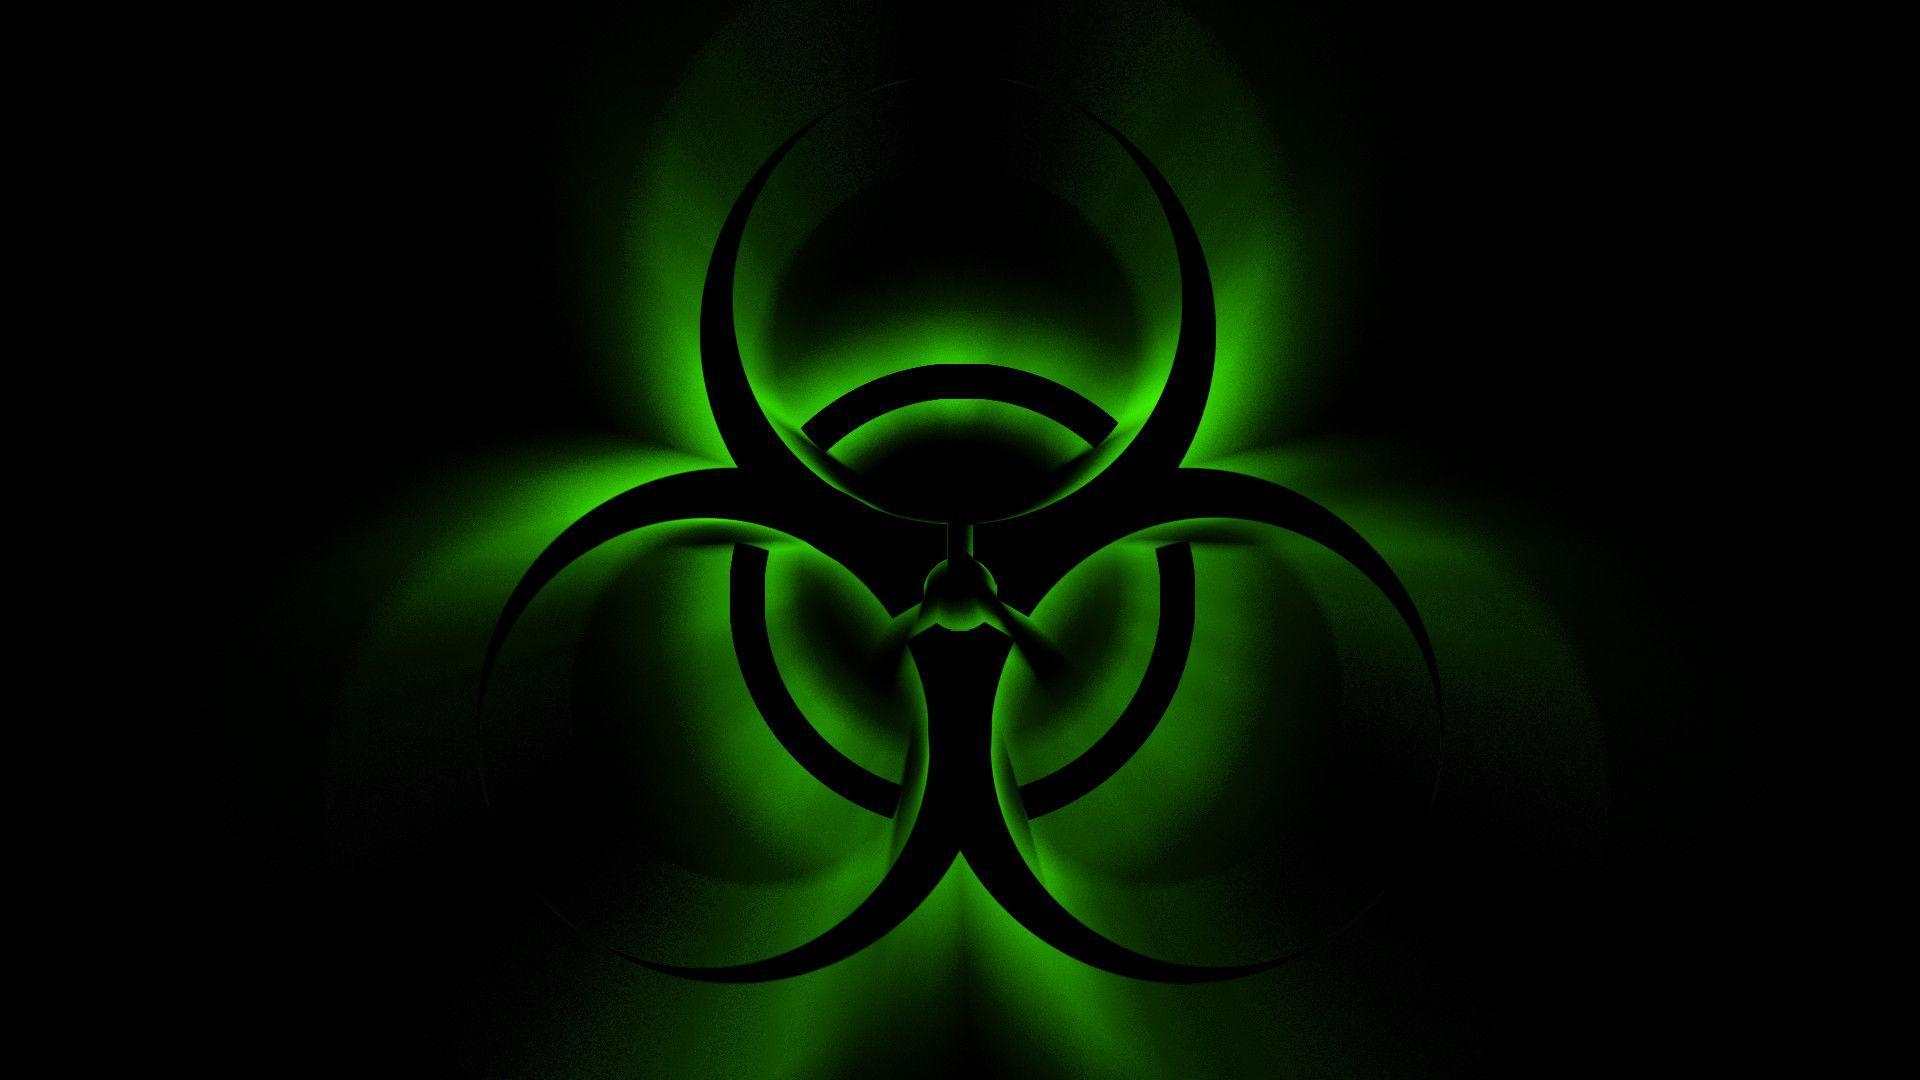 Wallpaper.wiki Biohazard Symbol Wallpaper Full HD PIC